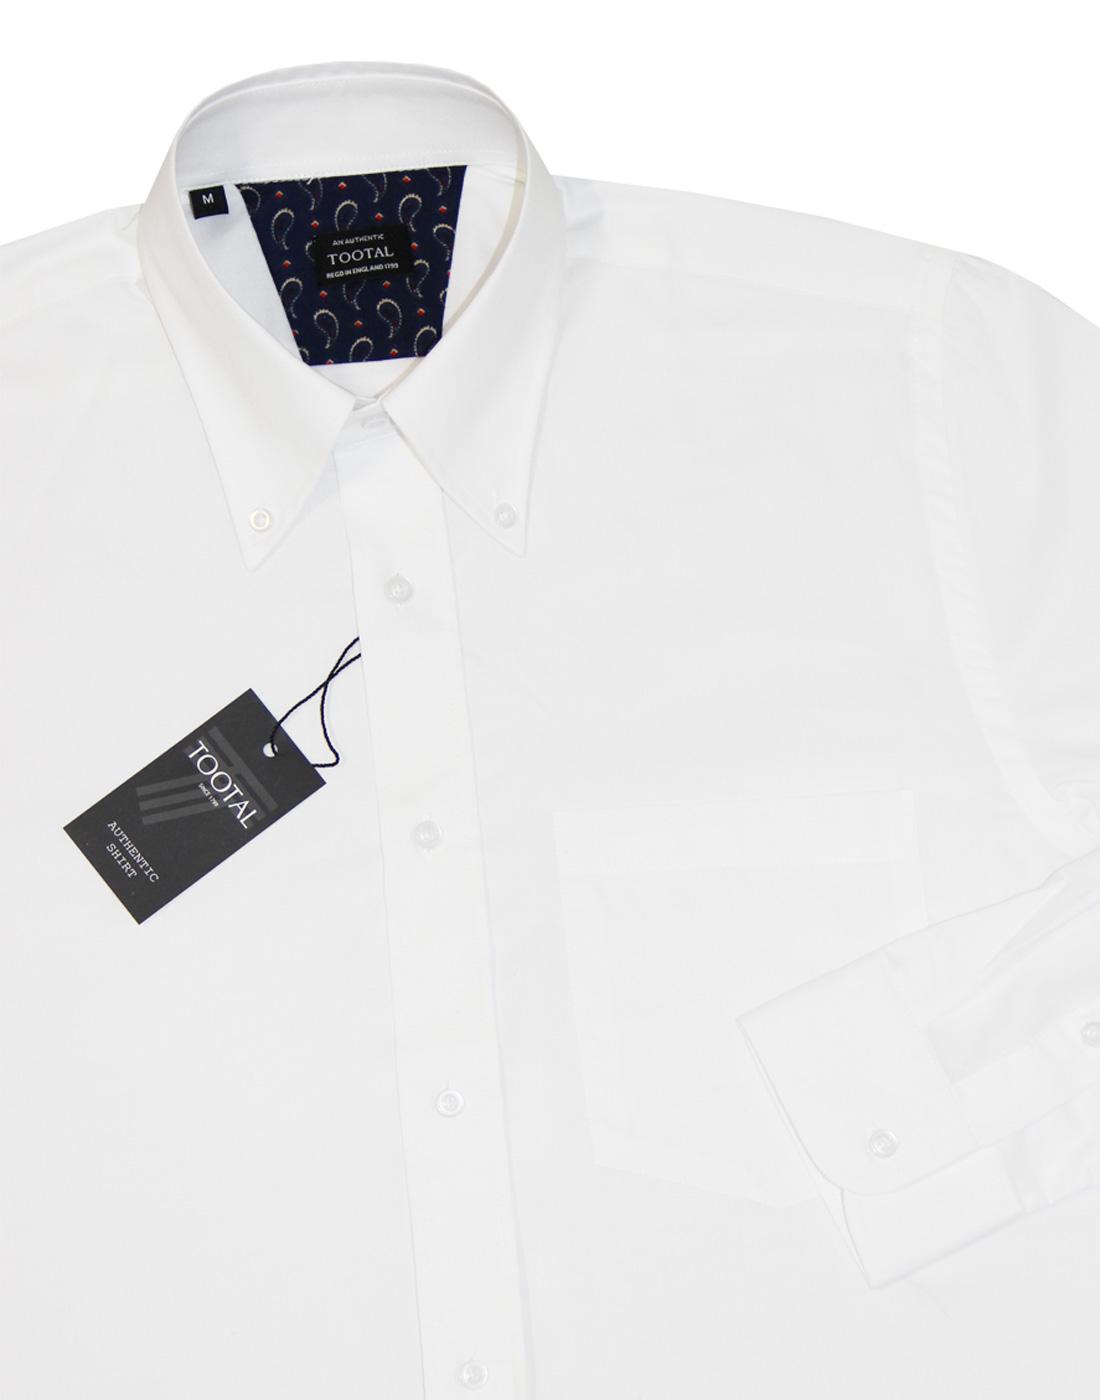 TOOTAL Men's 1960s Mod Ivy League Button Down Oxford Shirt White